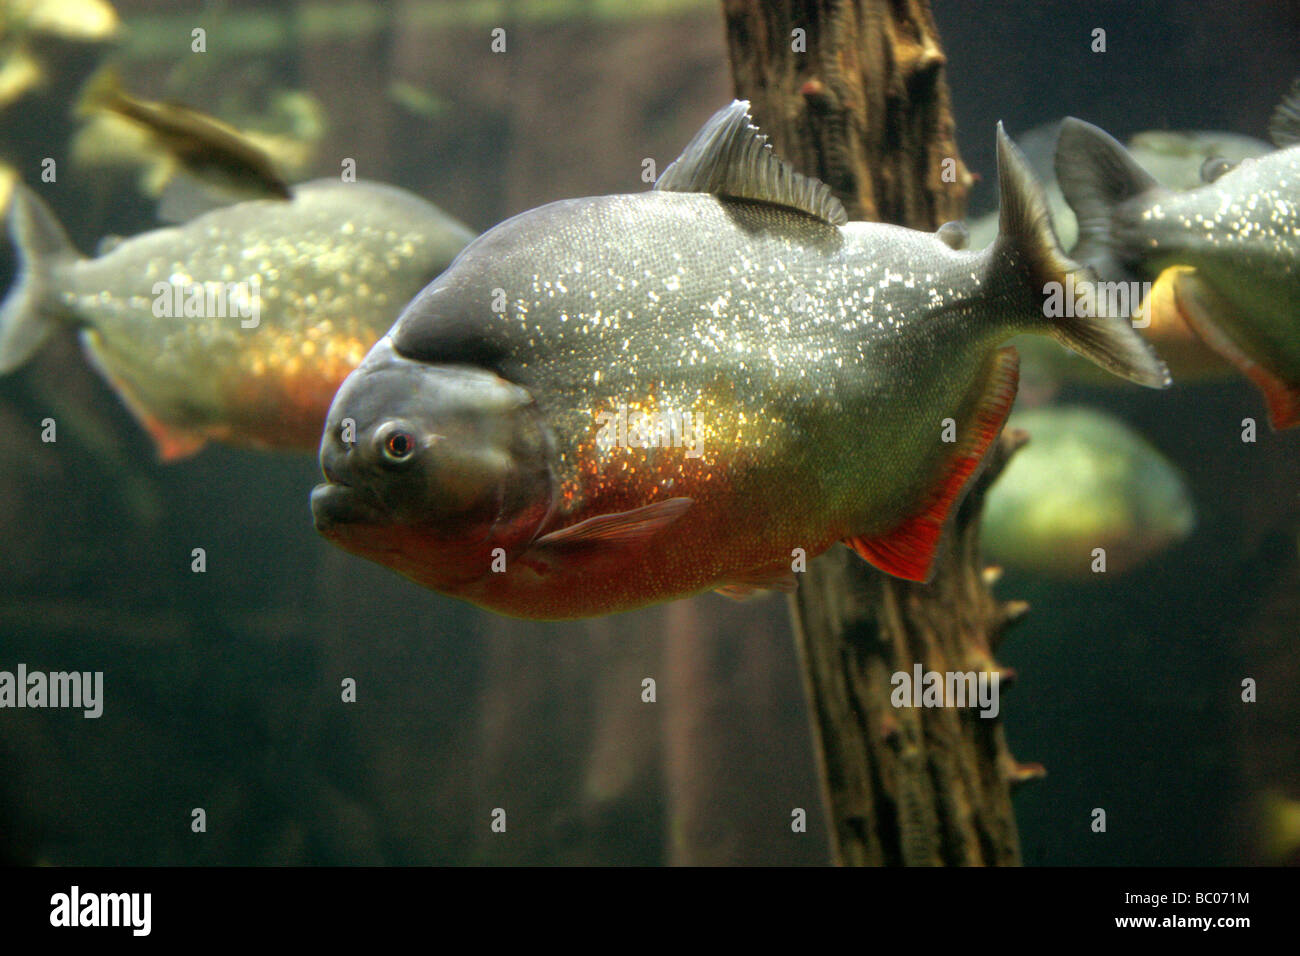 Red-bellied Piranha, Pygocentrus nattereri, South American Freshwater Fish. Stock Photo